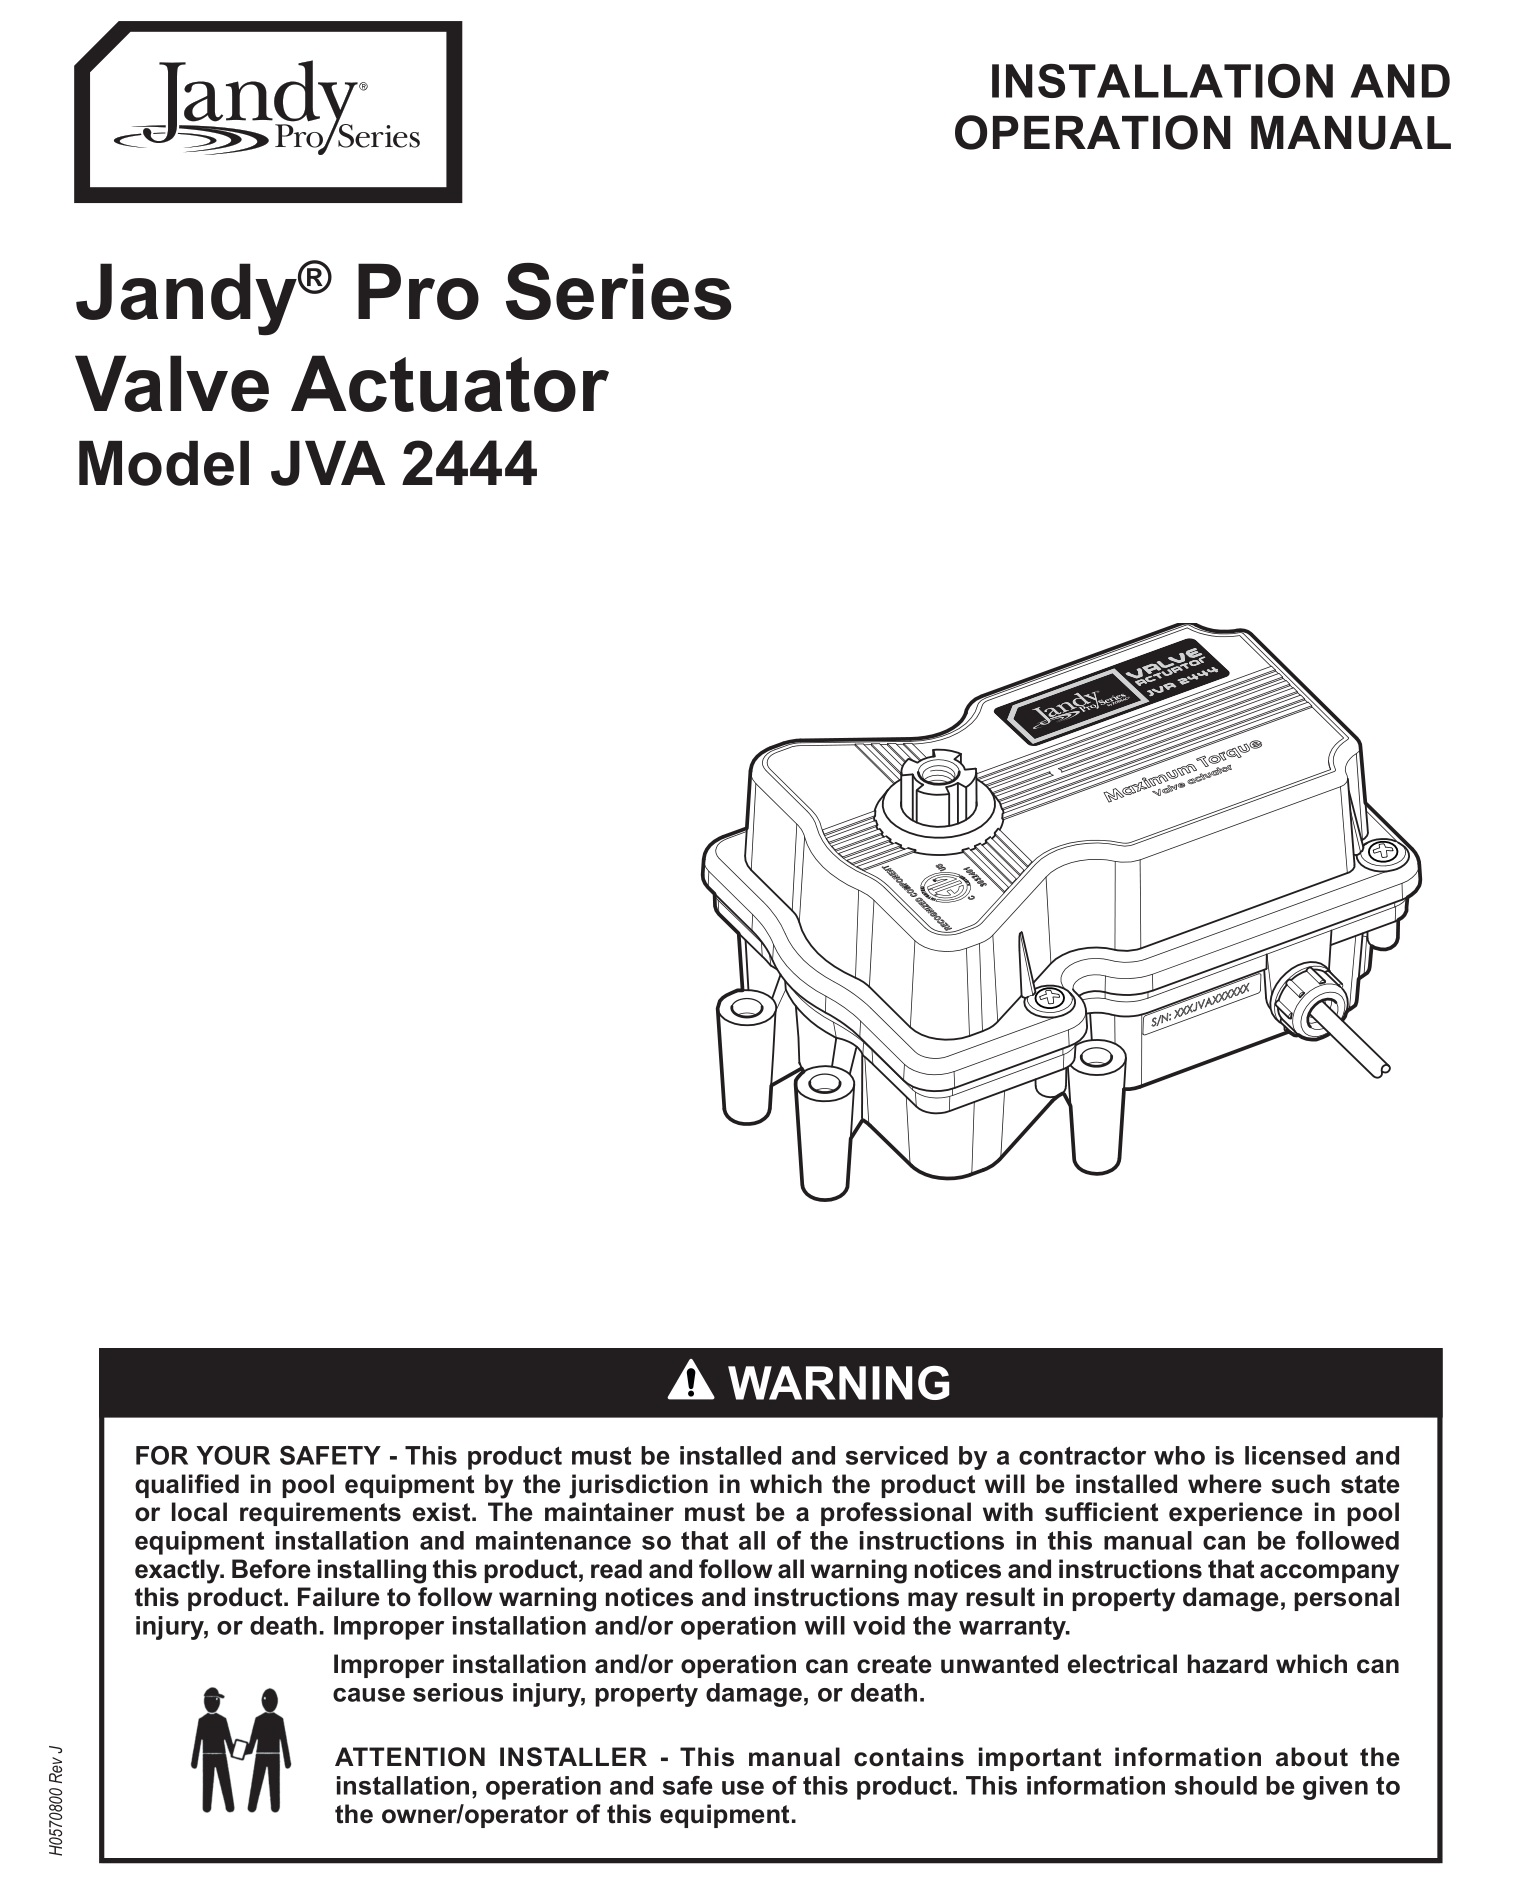 Jandy JVA 2444 Pro Series Valve Actuator Installation Guide